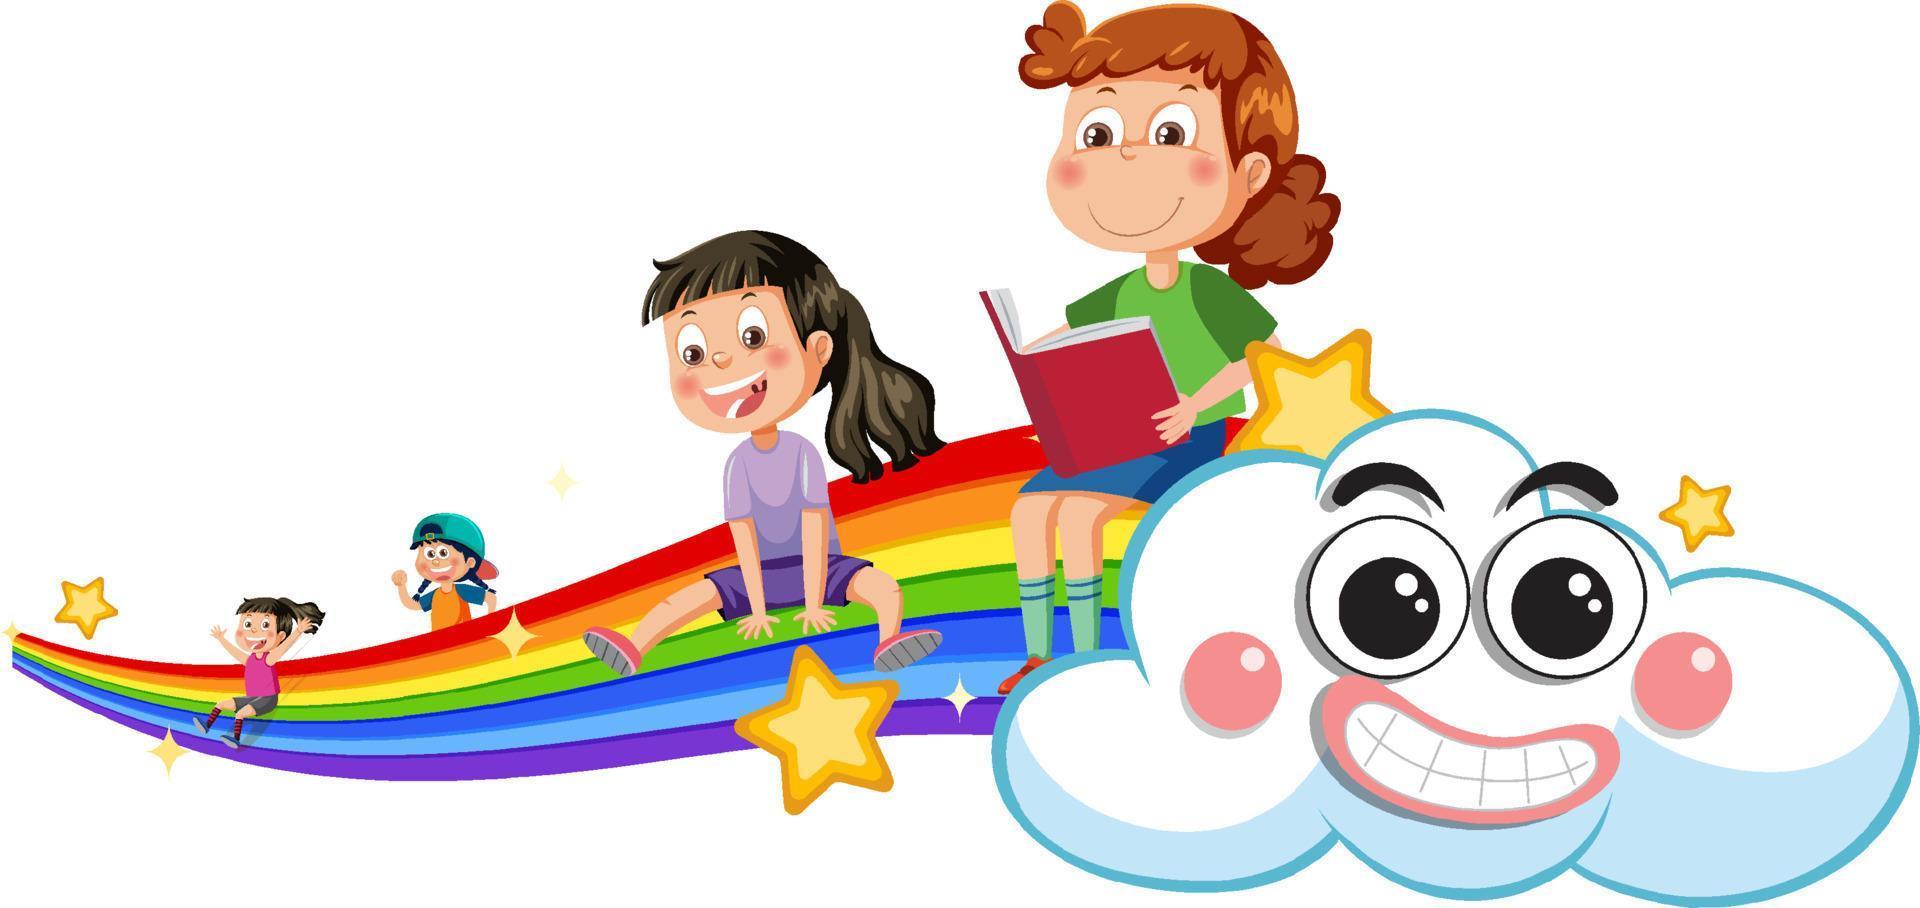 Kinder auf Regenbogen im Cartoon-Stil vektor